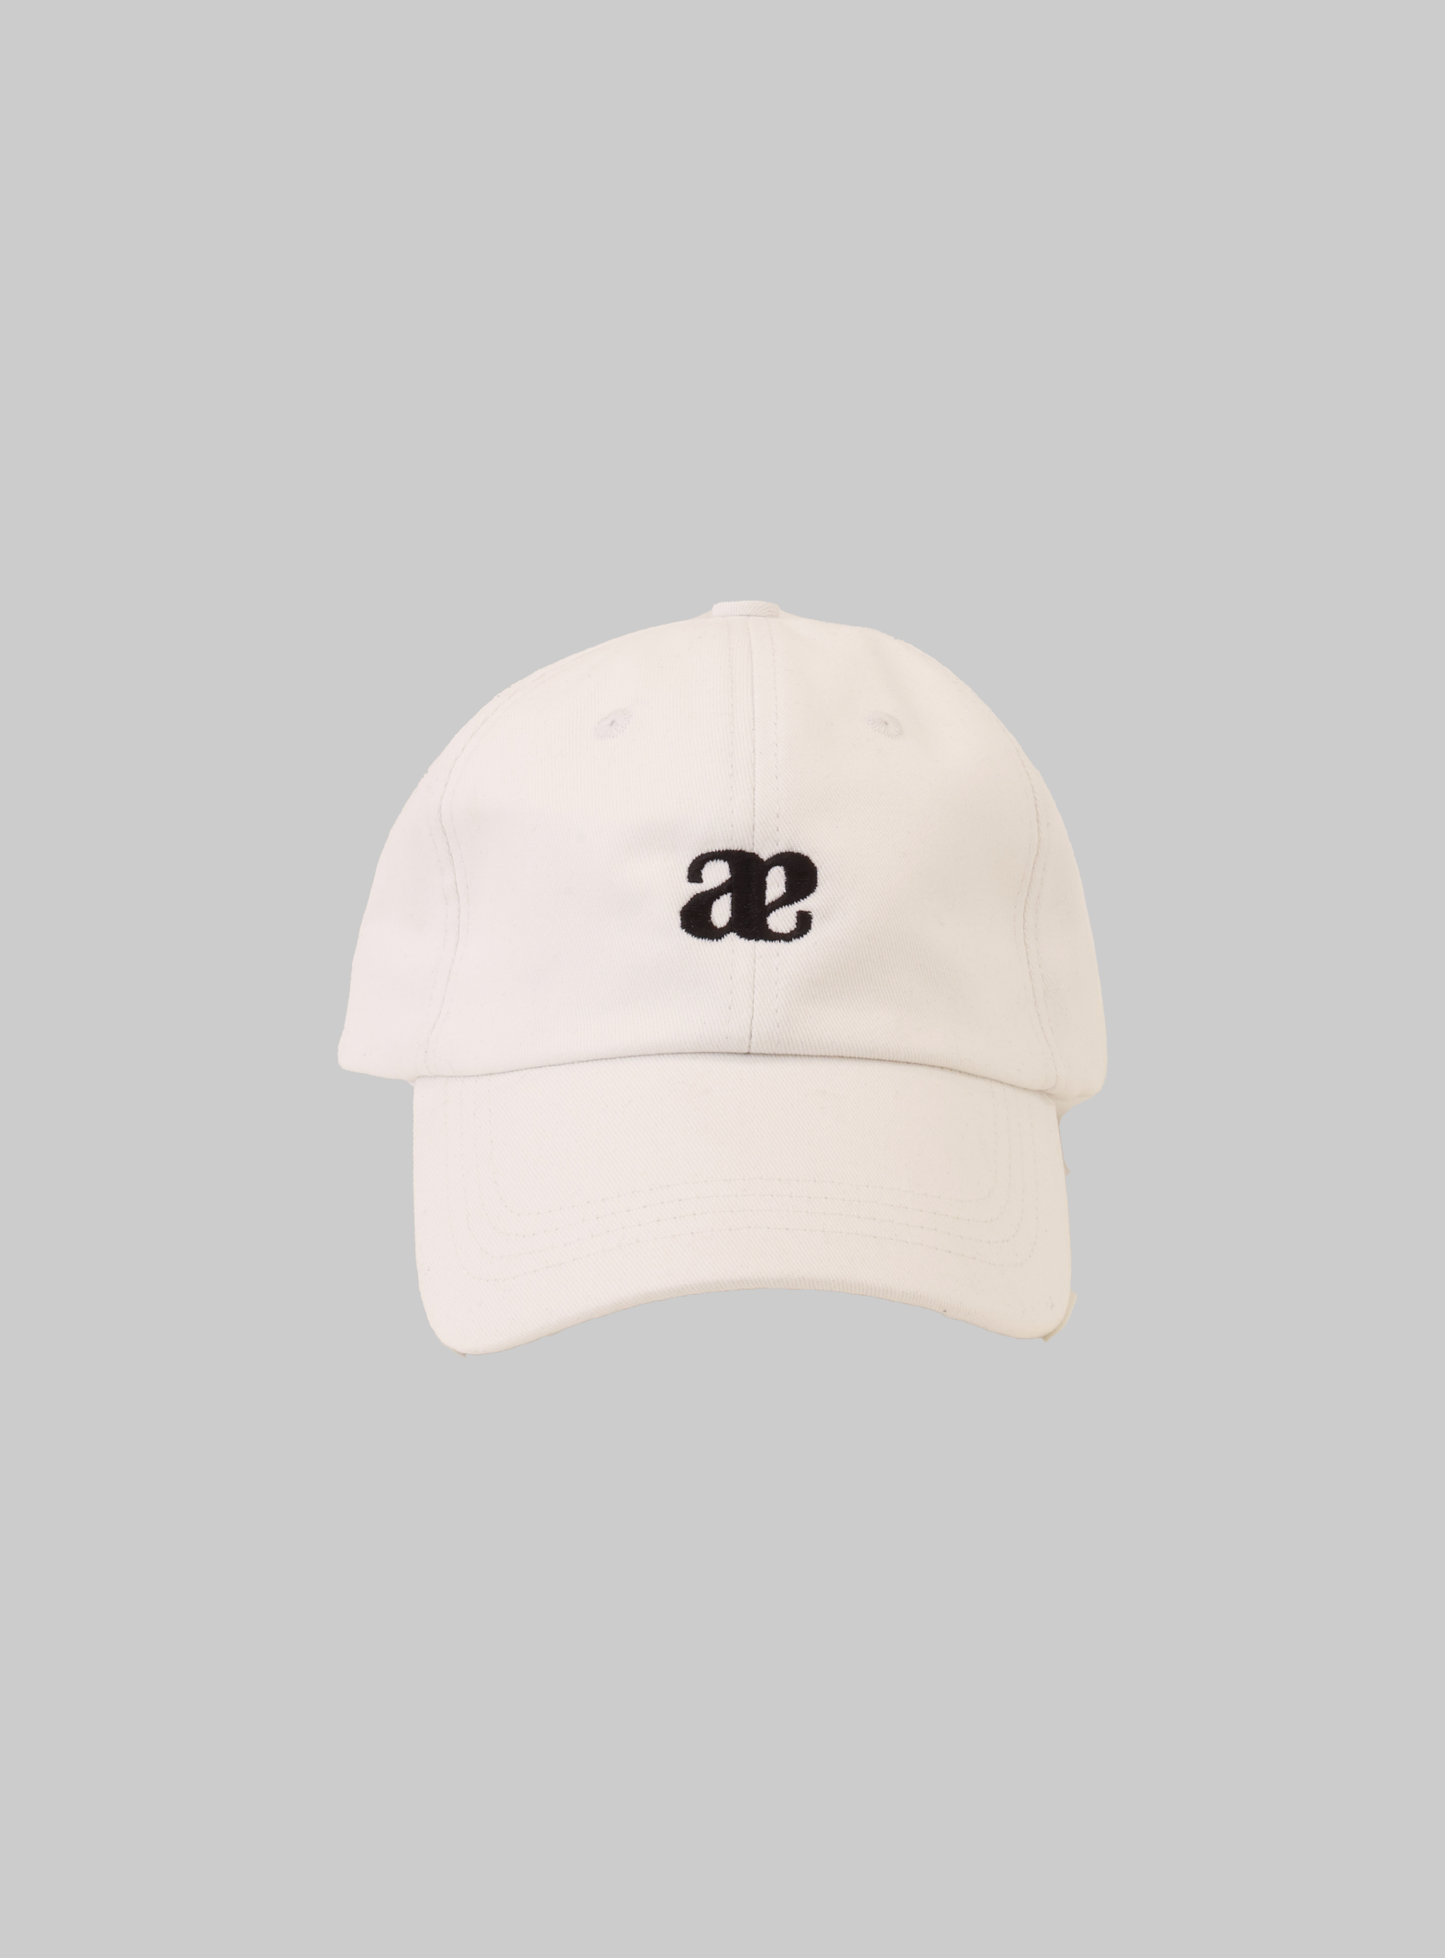 Anagram ASUNI Baseball Cap In White